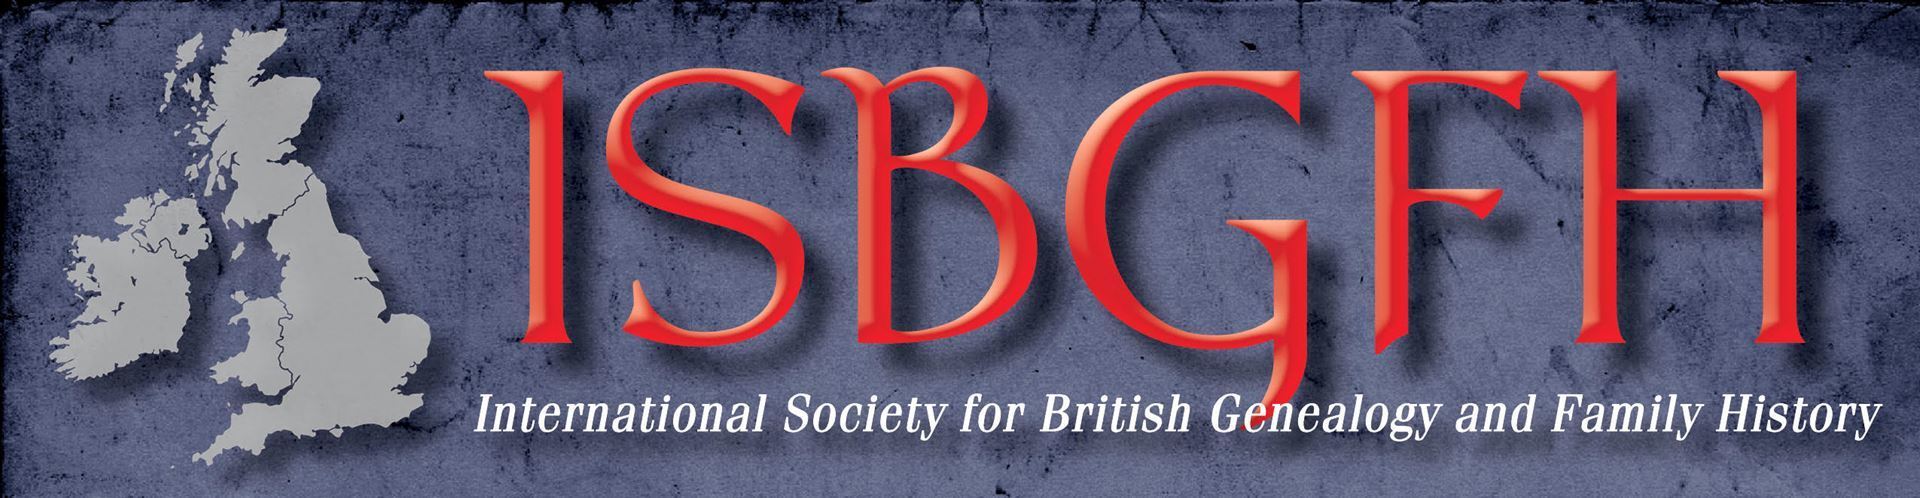 International Society for British Genealogy and Family History logo